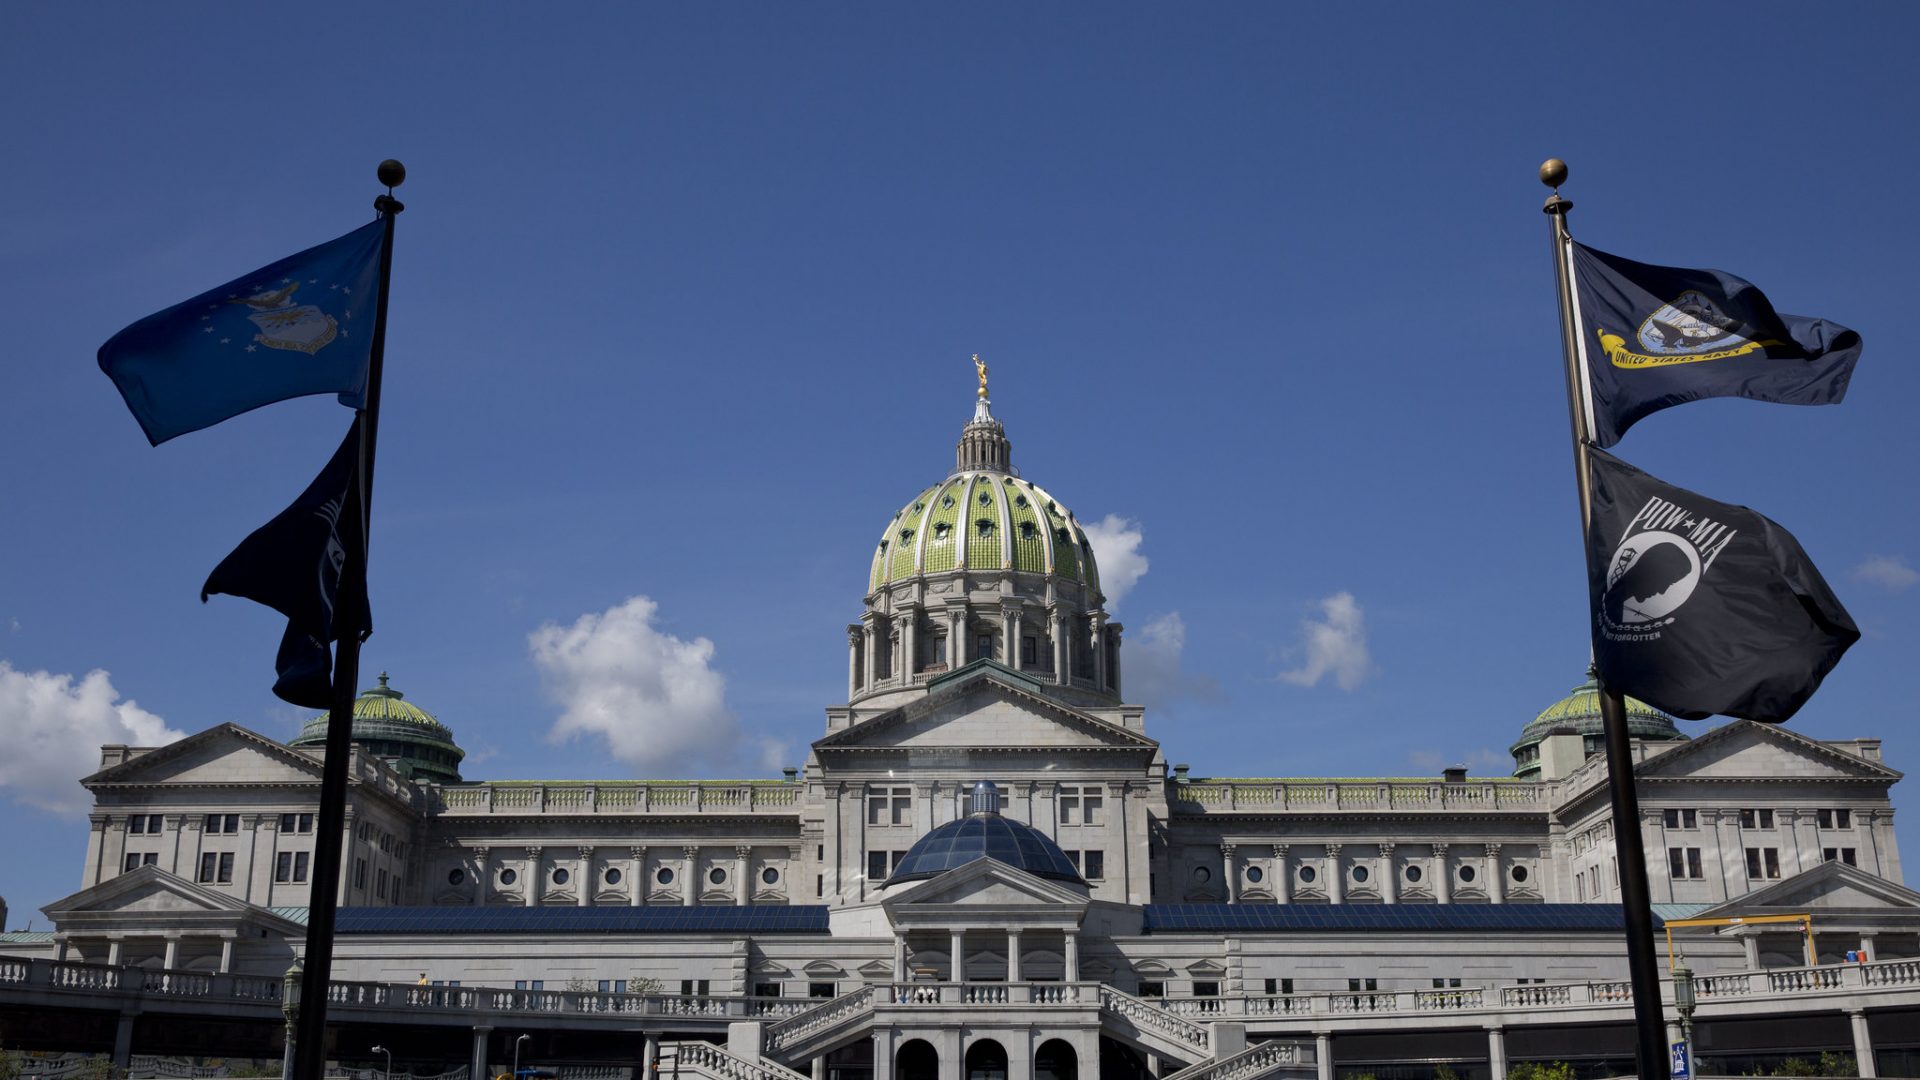 The Pennsylvania Capitol building in Harrisburg.